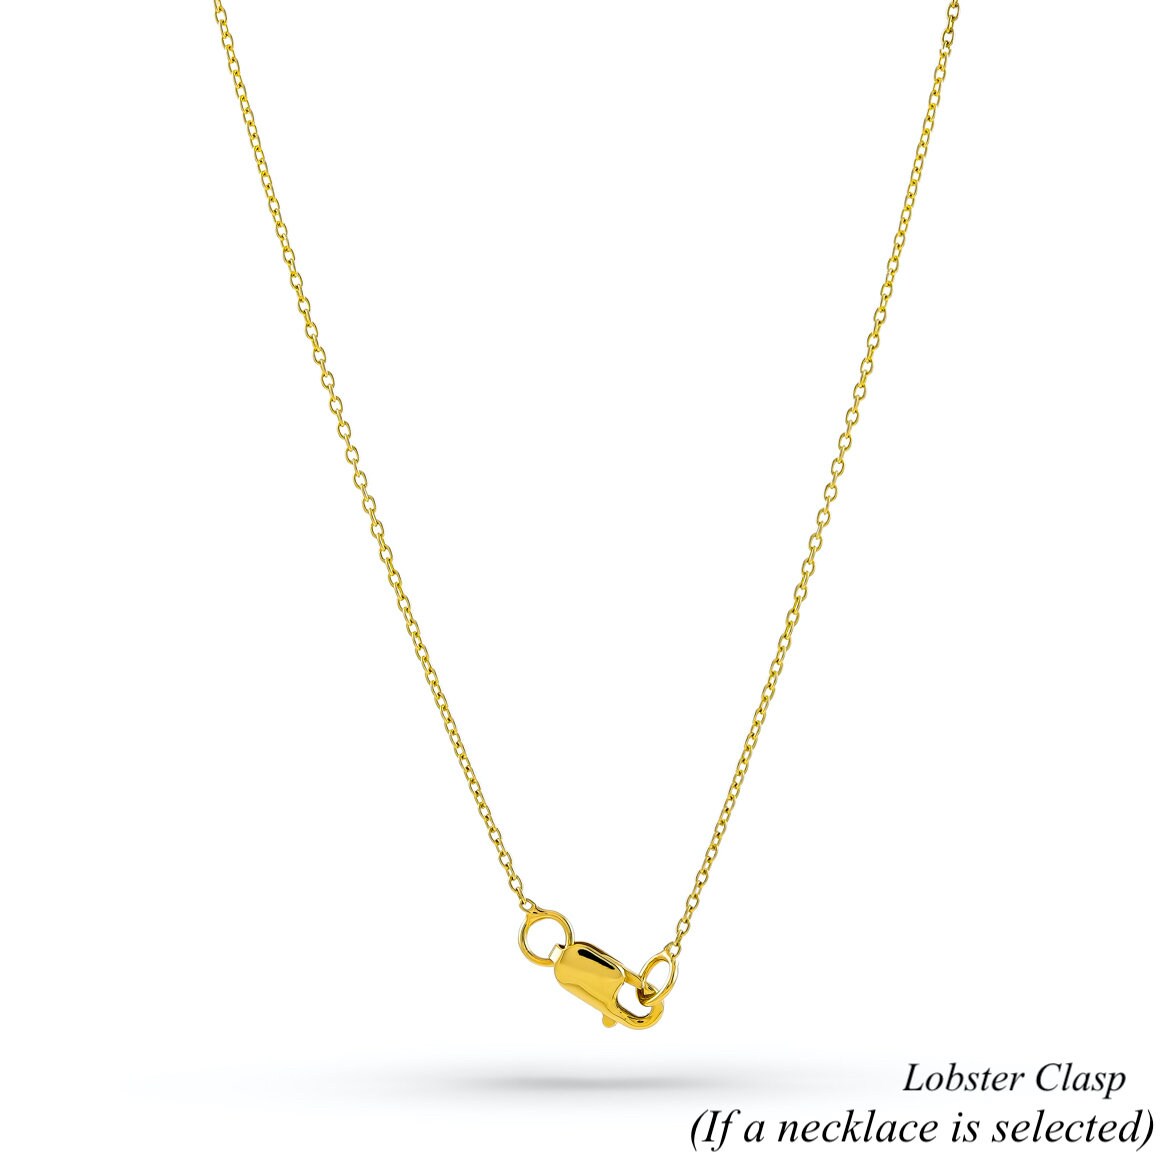 14K Gold Small Ocean Blue Cross Pendant Necklace